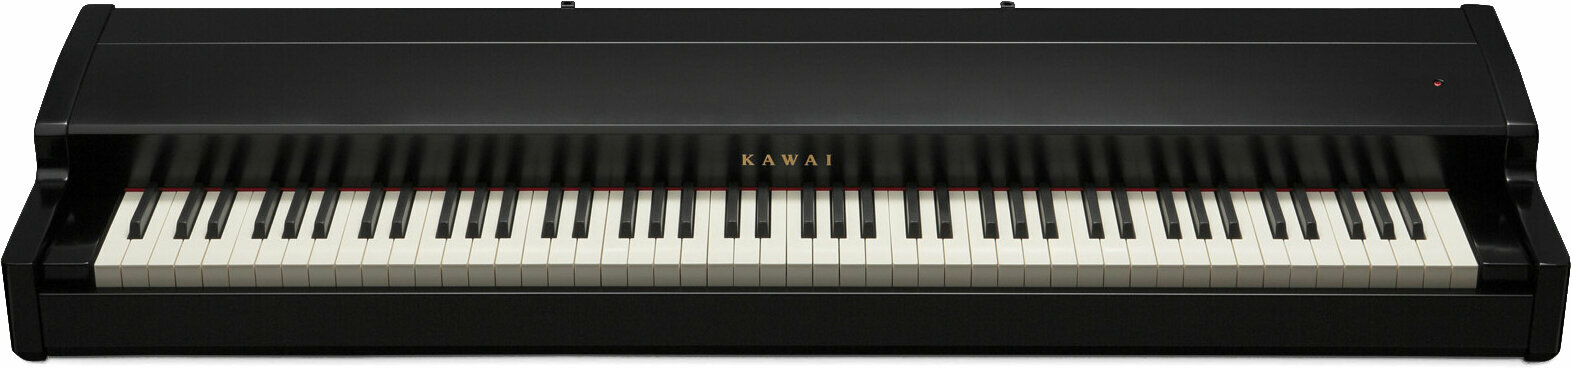 MIDI-Keyboard Kawai VPC1